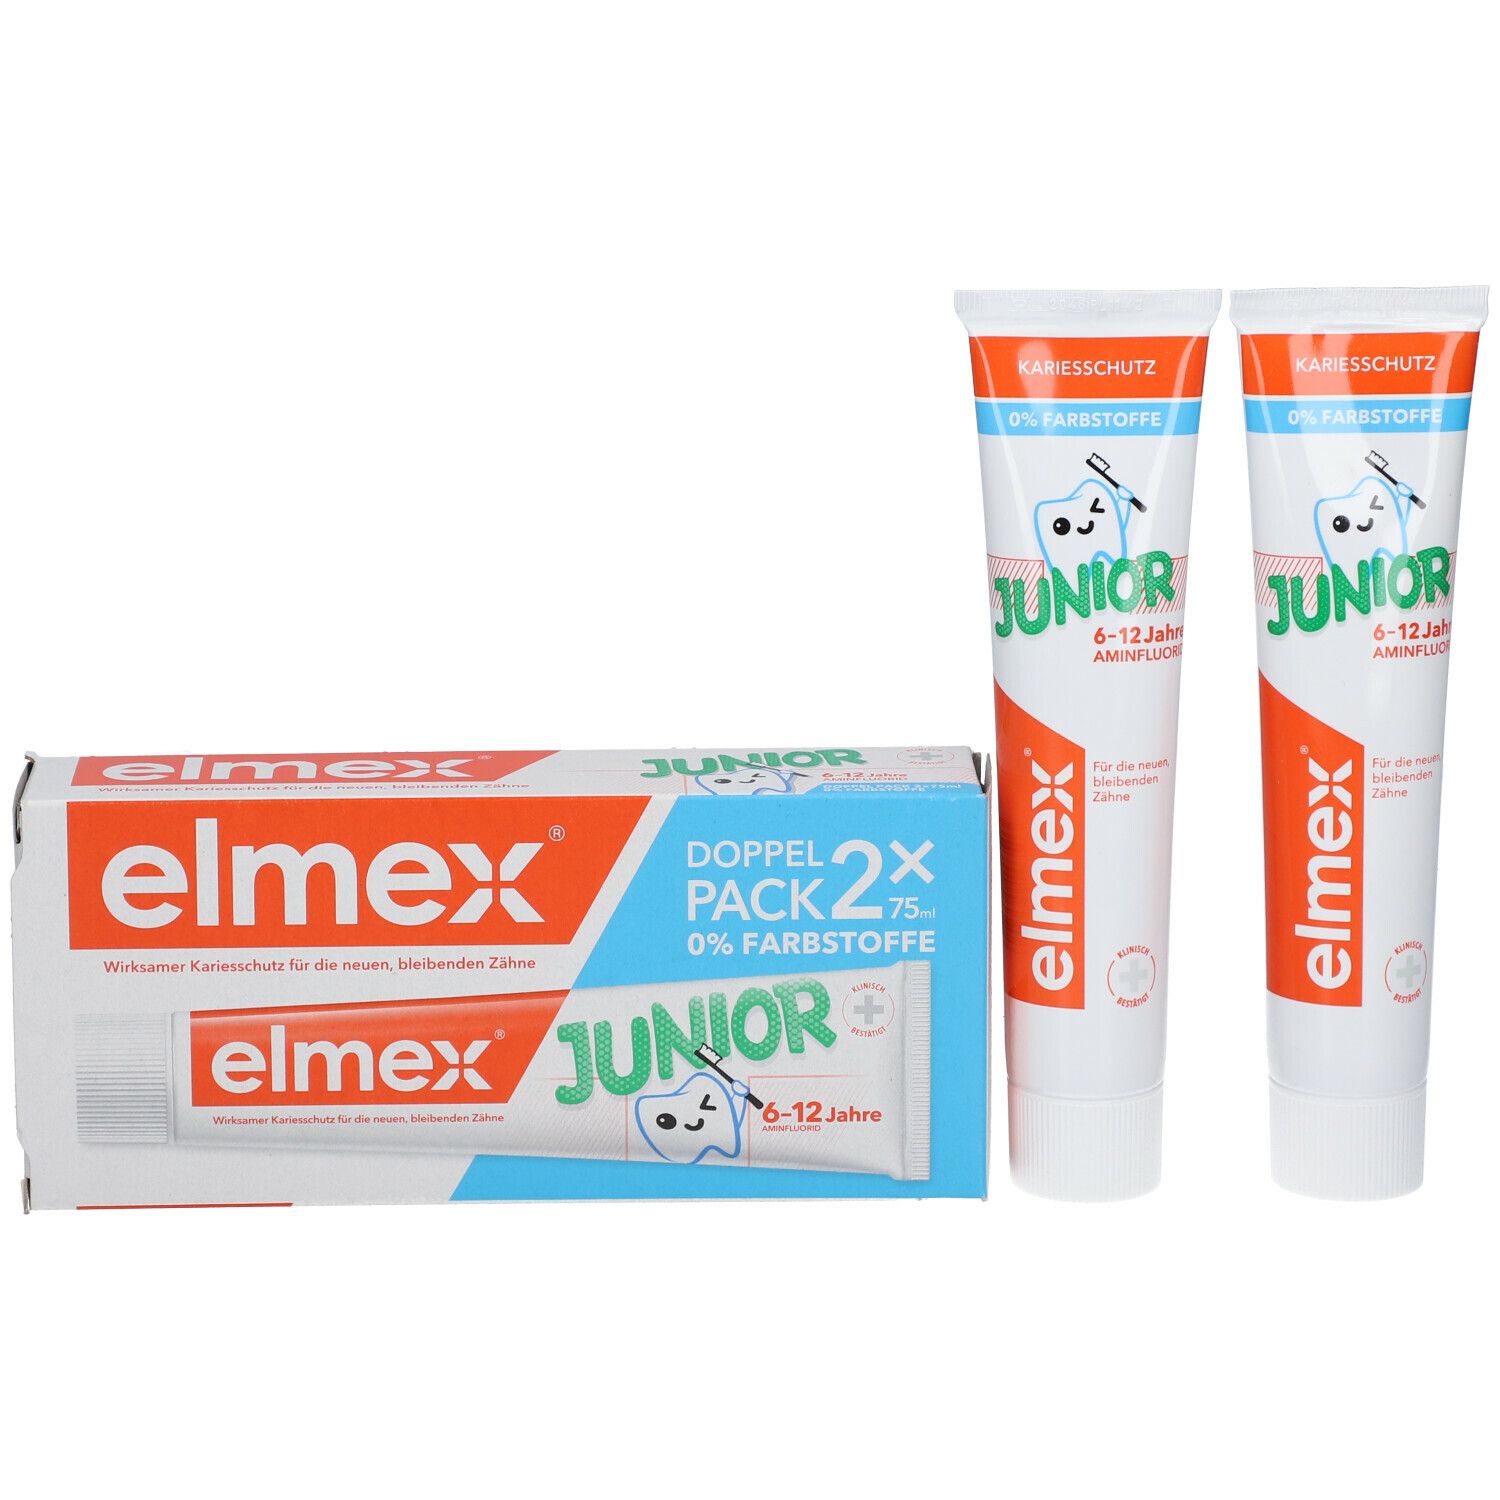 elmex Junior Kinder-Zahnpasta